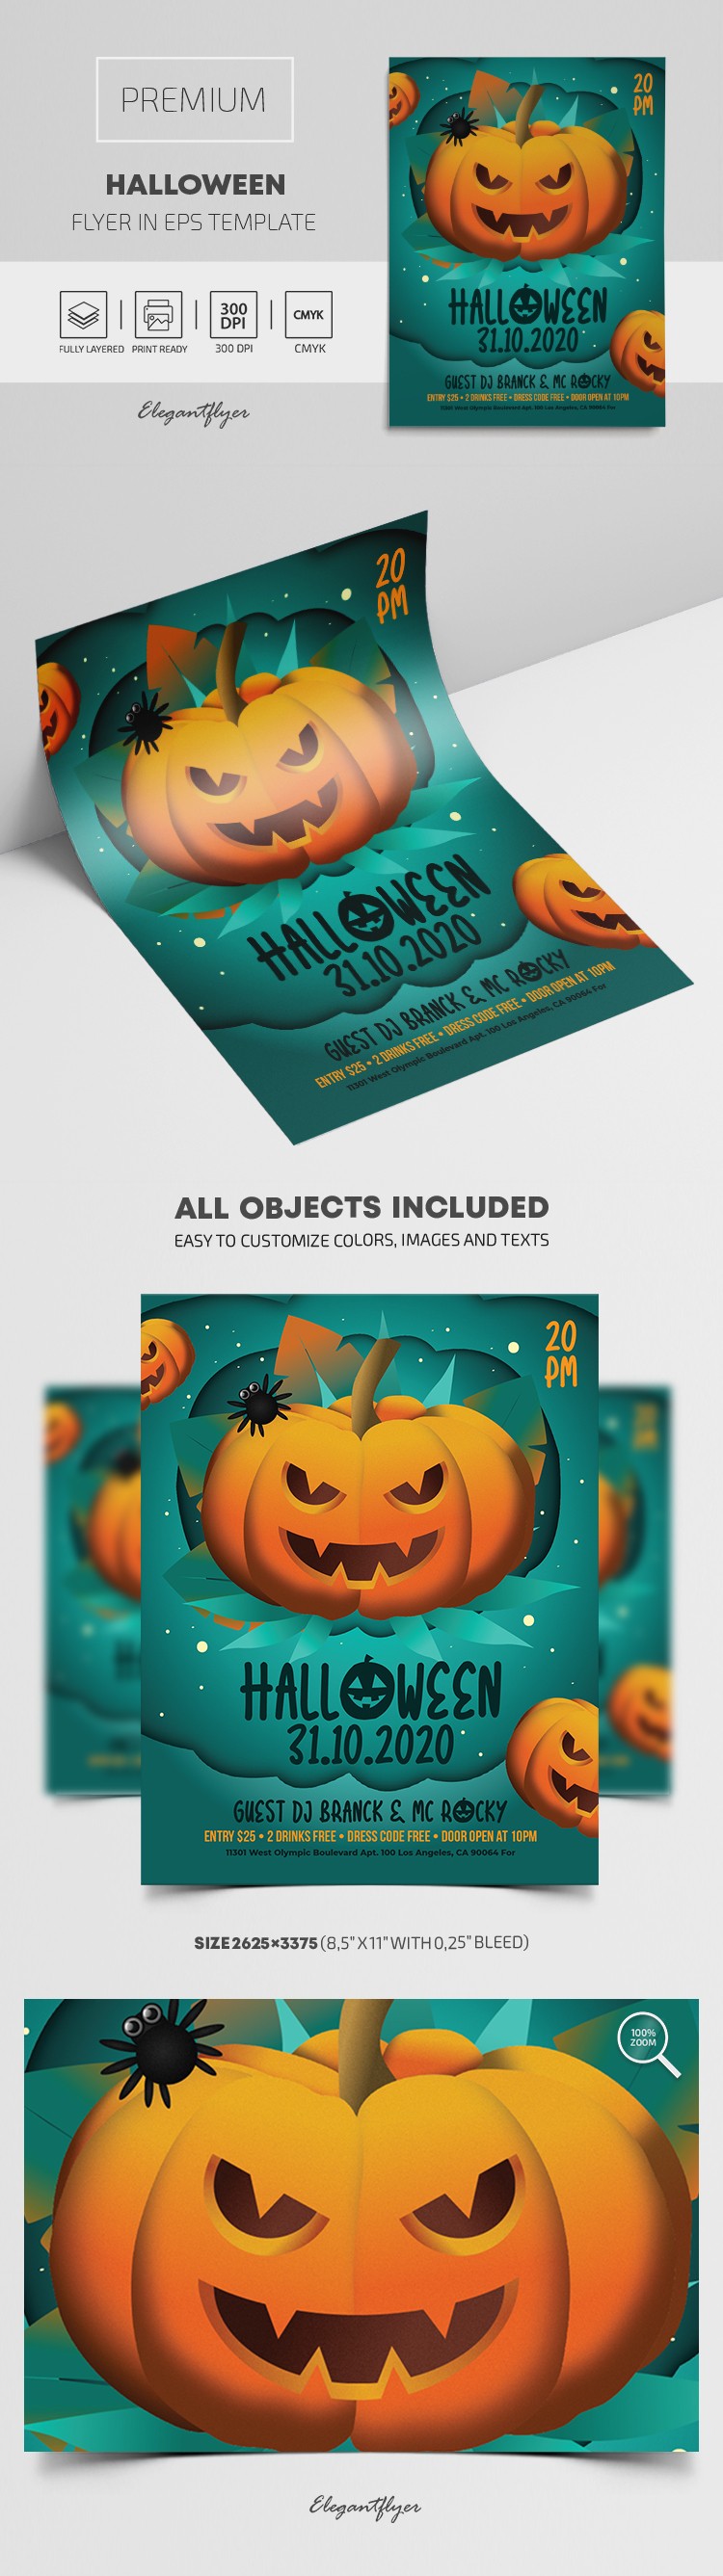 Halloween Vector Flyer by ElegantFlyer